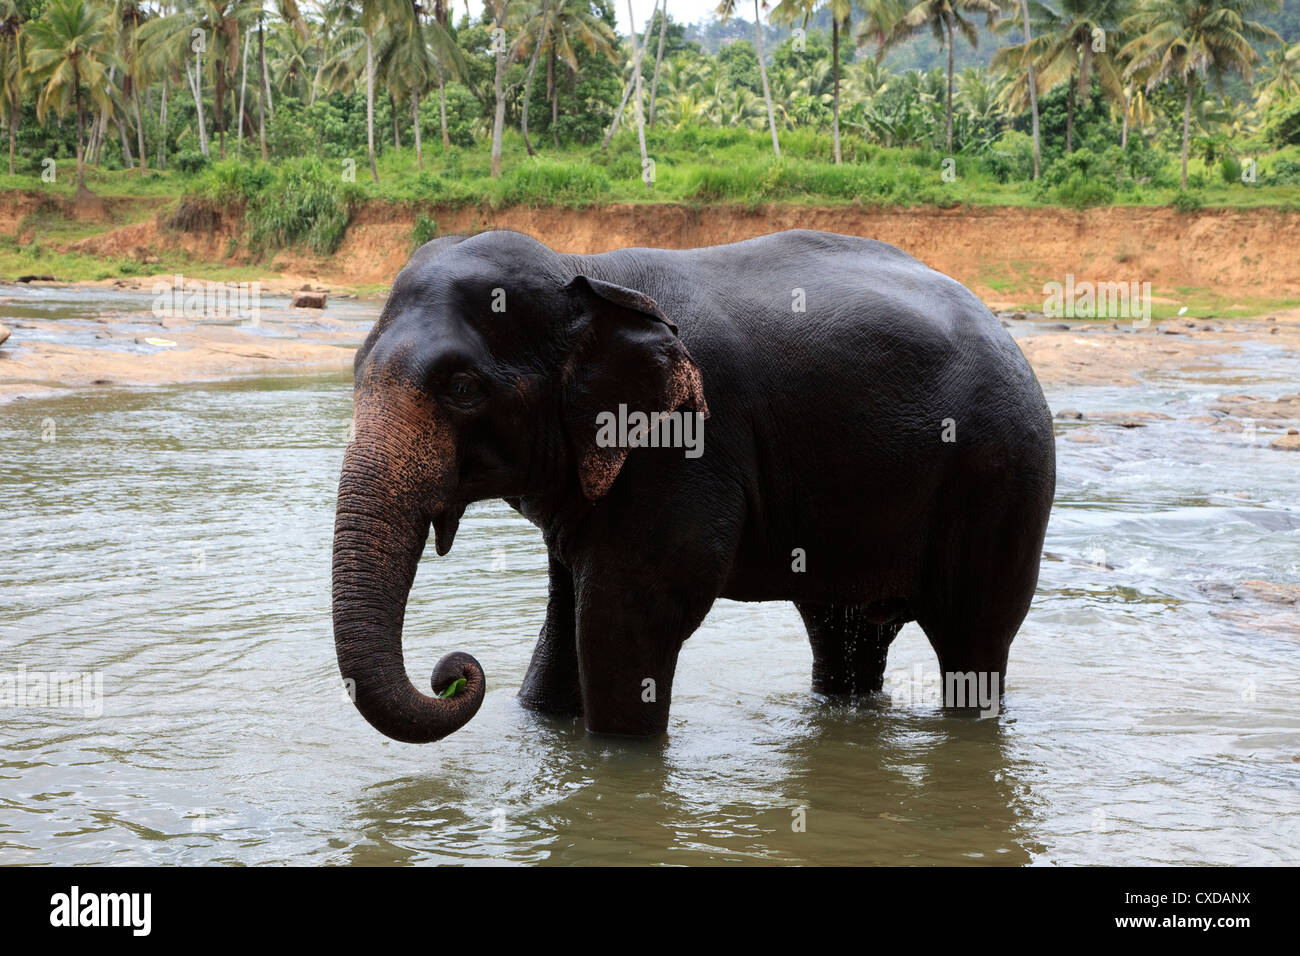 Elephant from the Pinnawala Elephant Orphanage, kegella, Sri Lanka washing in the local river Stock Photo